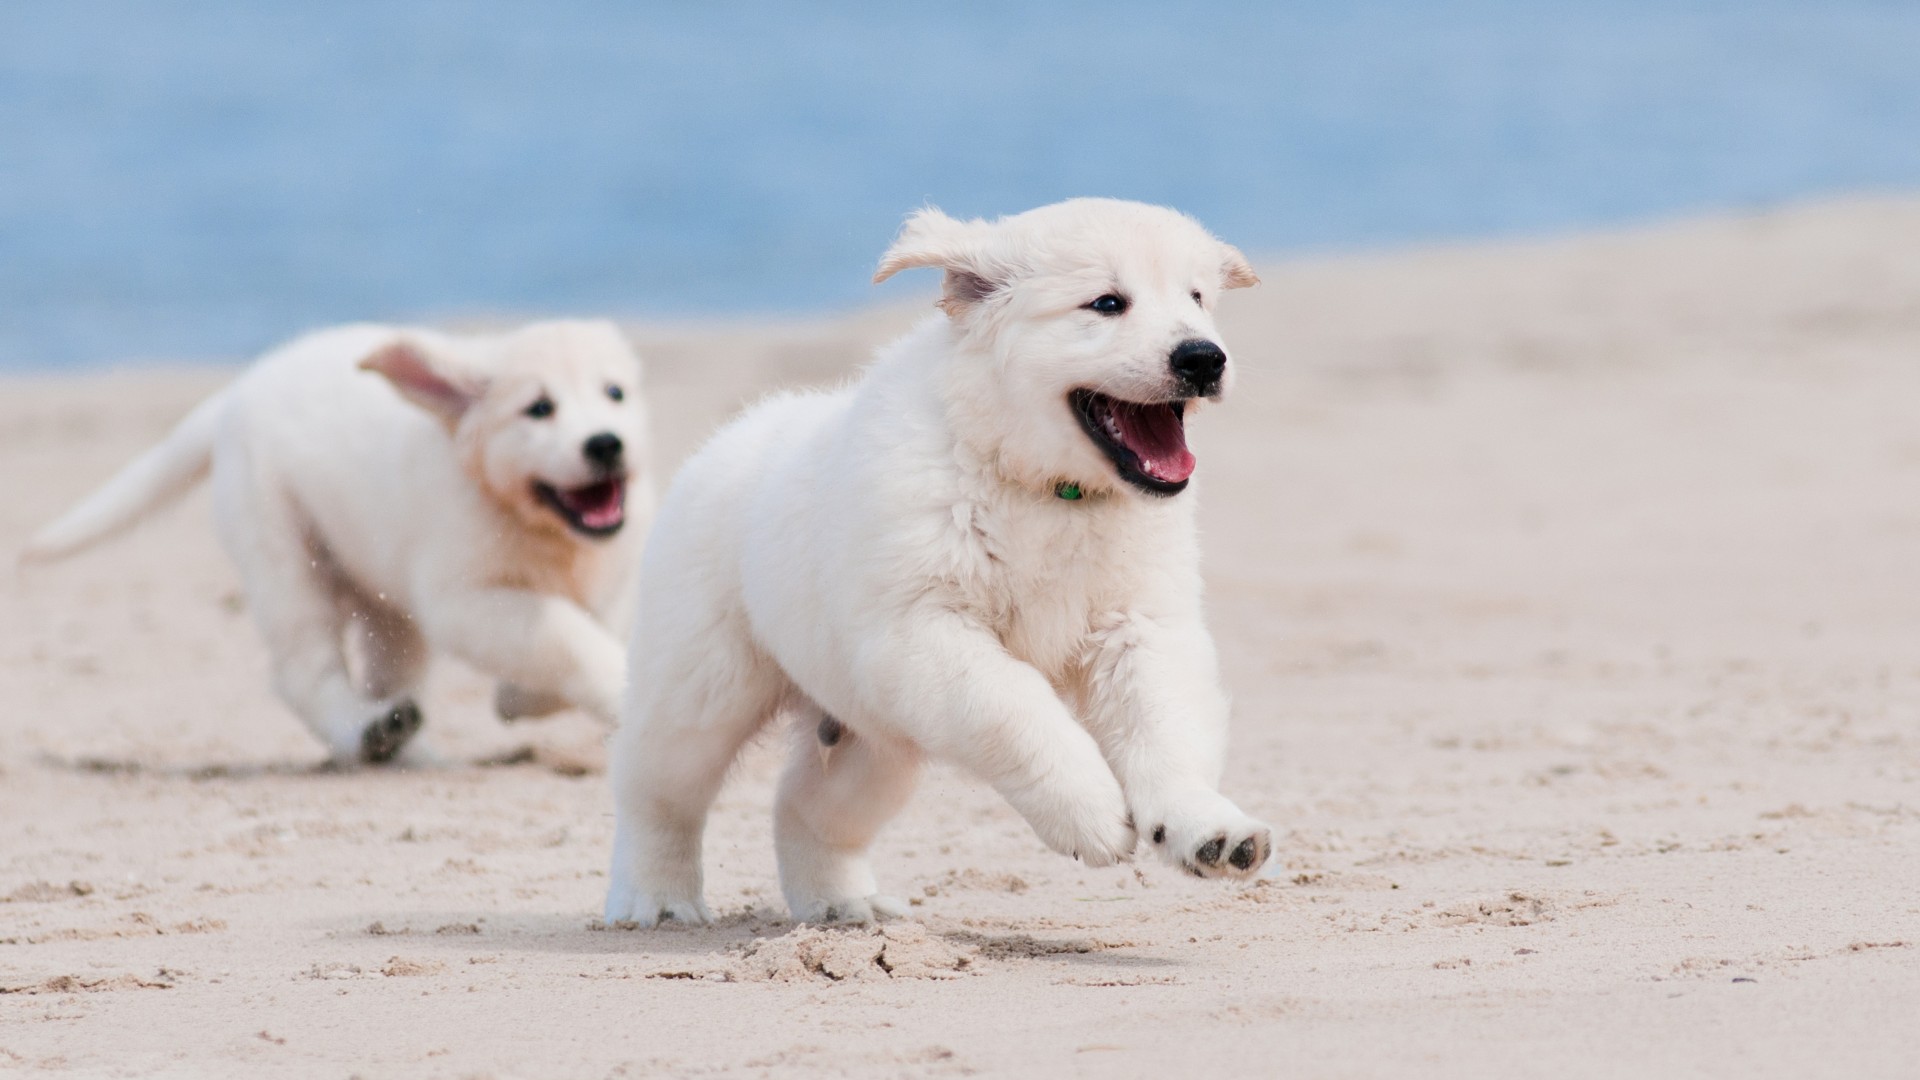 Dog, puppy, white, animal, pet, beach, sand, sea (horizontal)